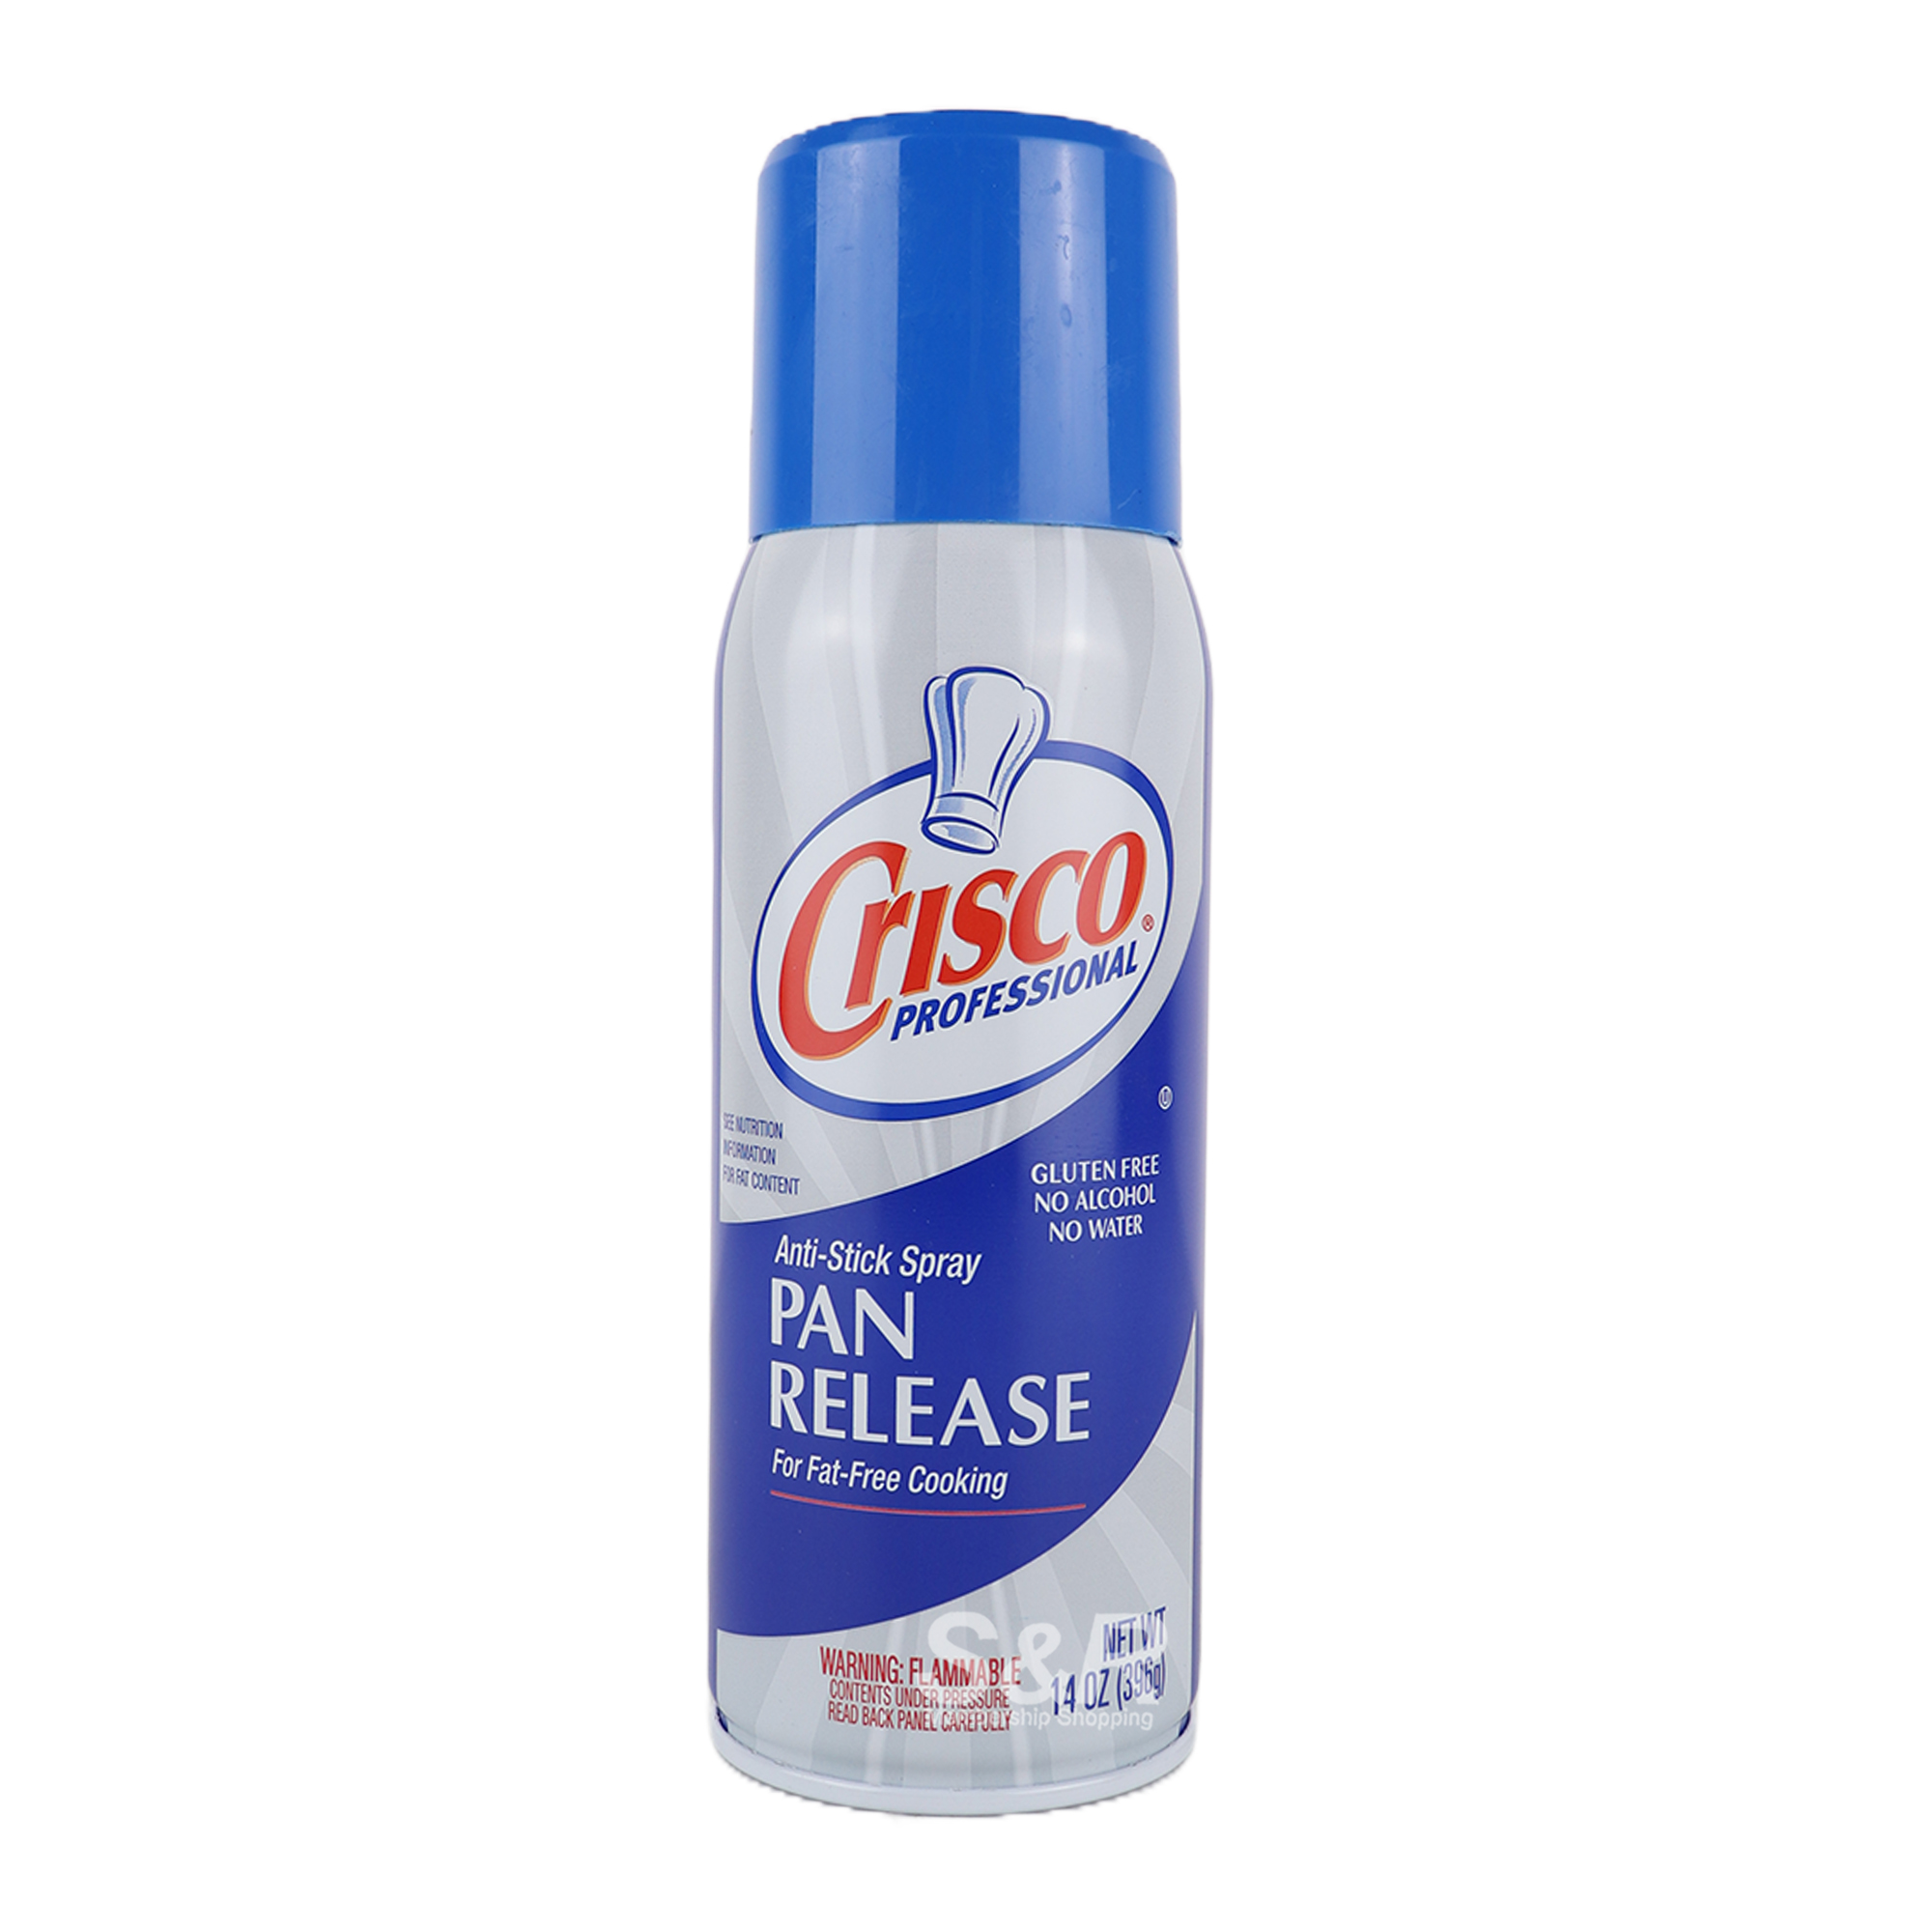 Crisco Professional Pan Release Anti-Stick Spray 396g